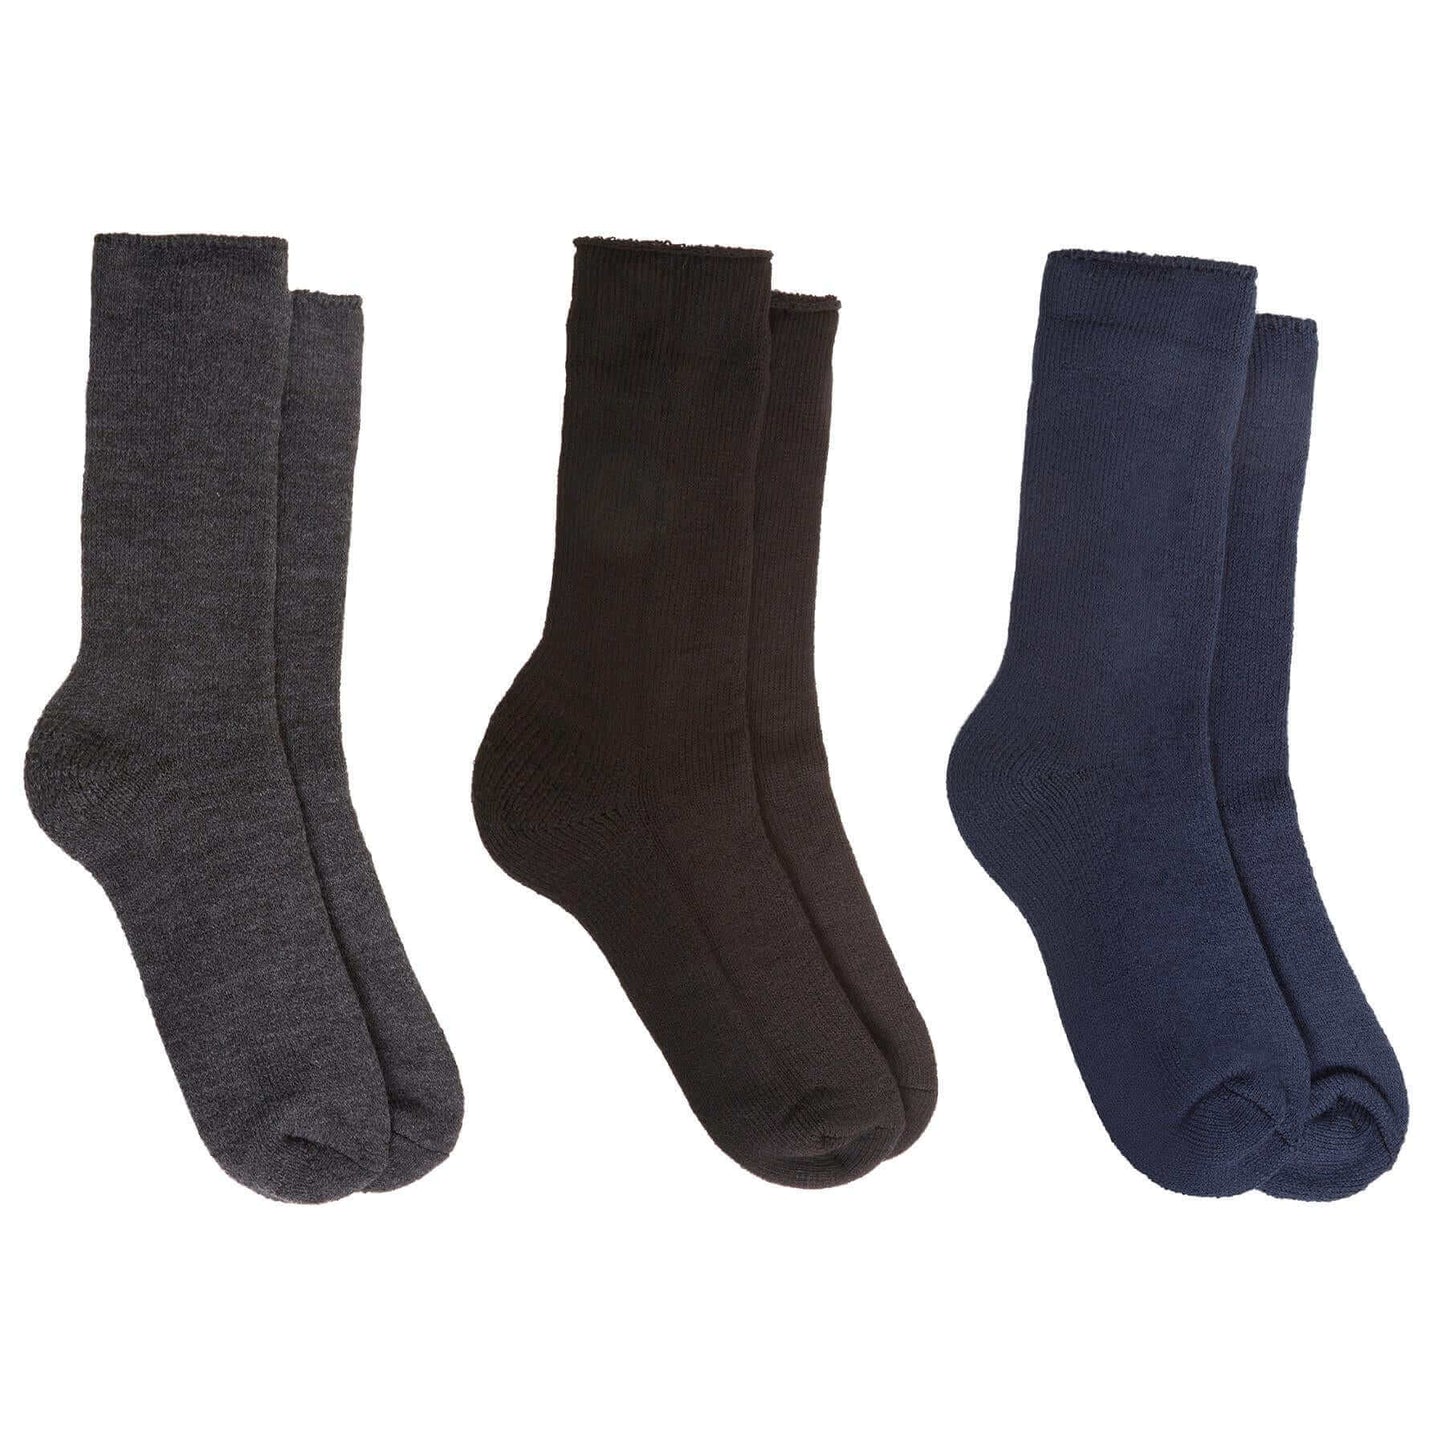 Heatwave® Pack Of 3 Mens Thermal Hot Socks, Heavy Duty Boot Socks UK 6-11. Buy now for £8.00. A Socks by Heatwave Thermalwear. 6-11, assorted, baselayer, black, brown, grey, heatwave, hiking, mens, mens socks, navy, outdoor, skiing, socks, sports, thermal